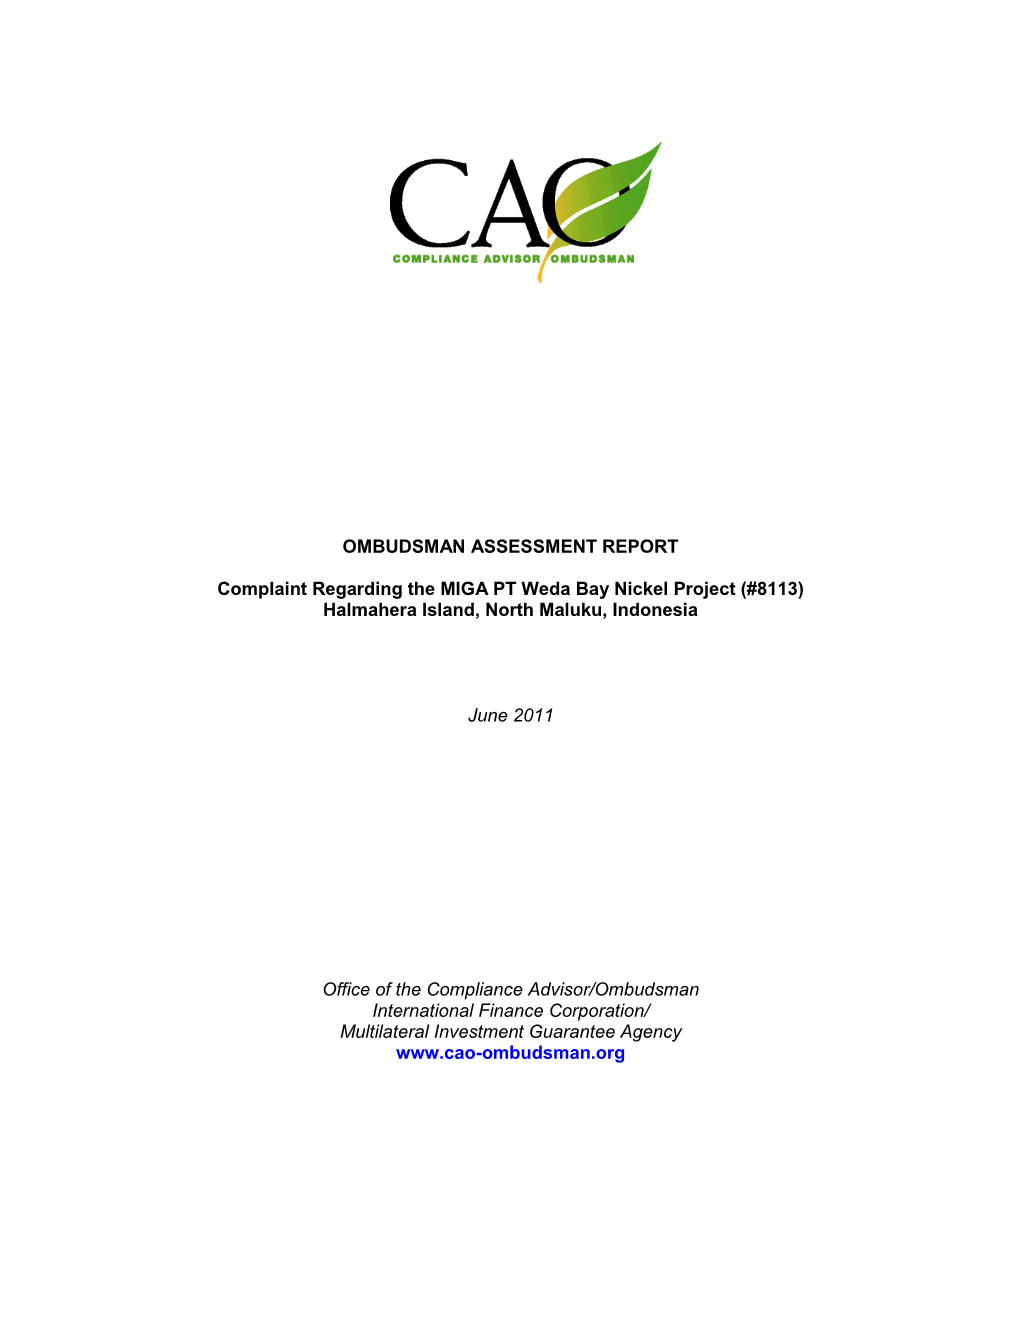 Ombudsman Assessment Report: Complaint Regarding the MIGA PT